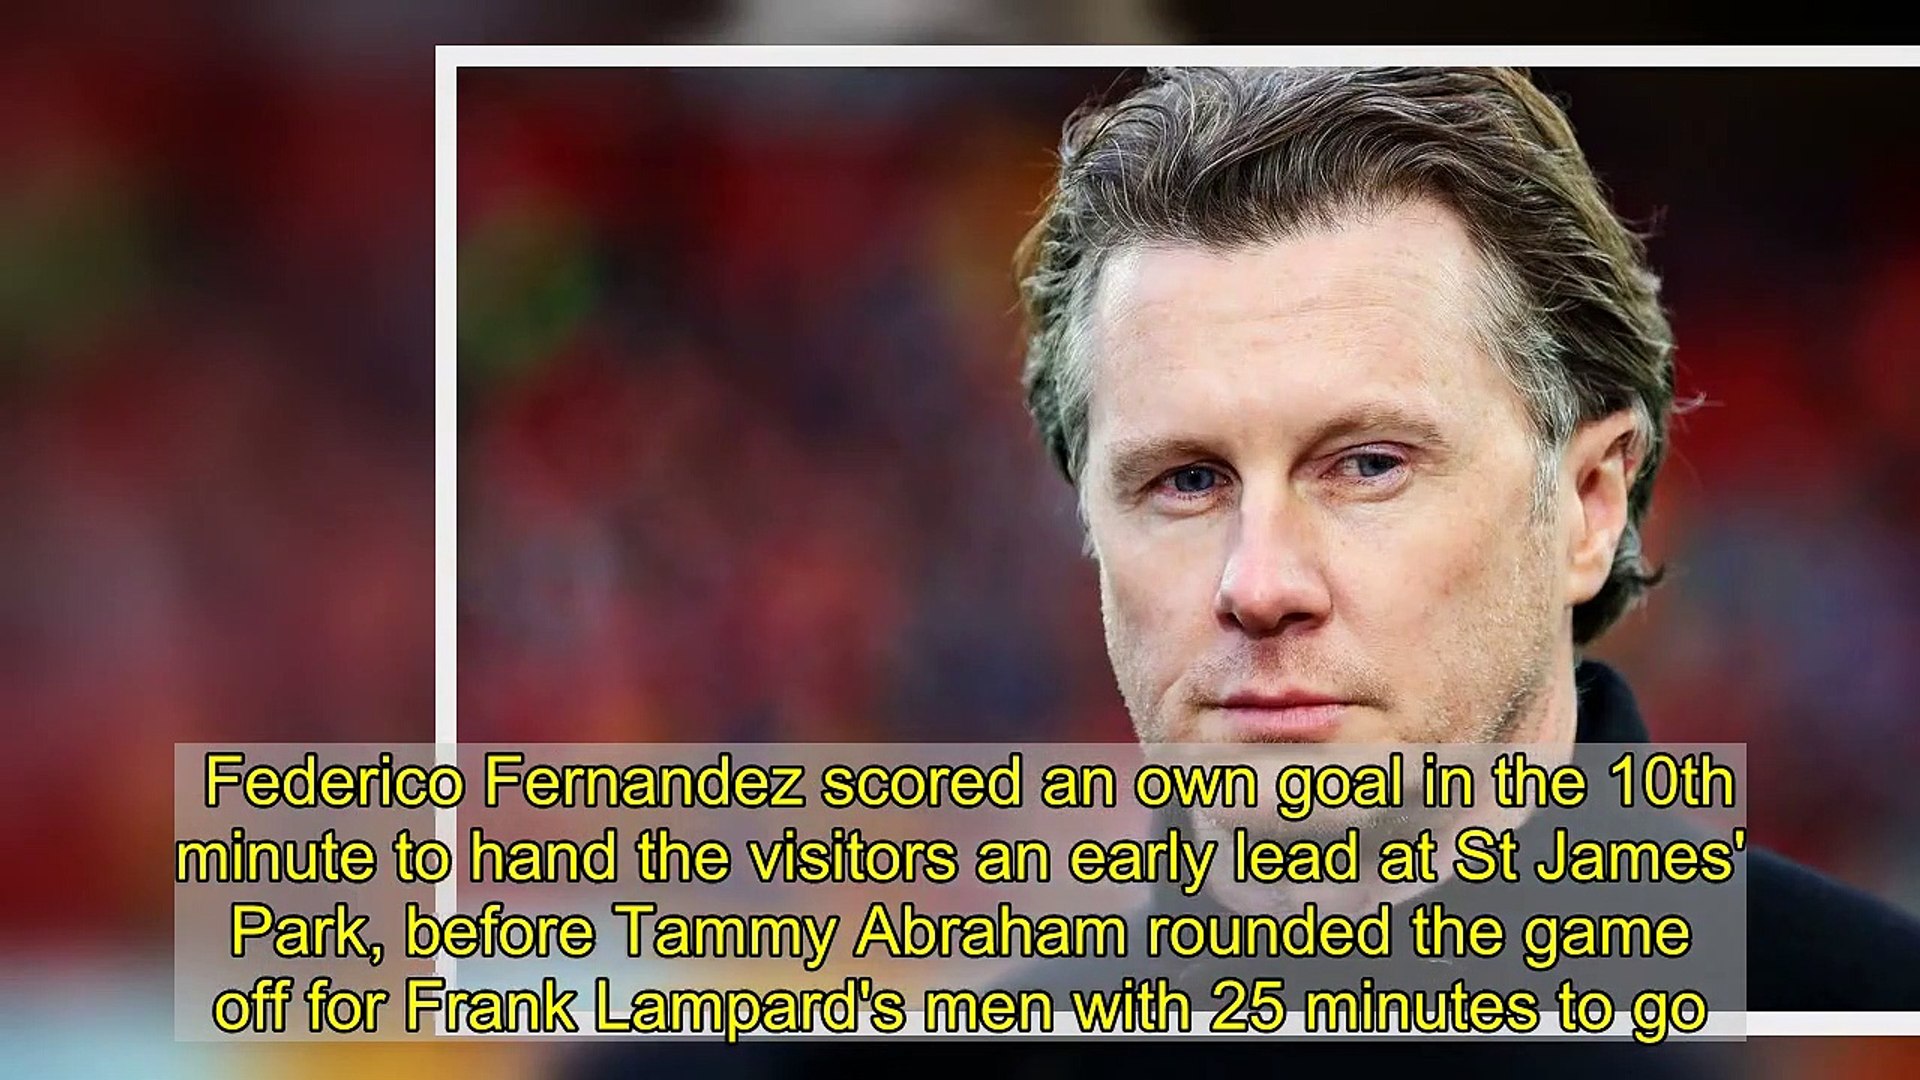 Steve McManaman rant sums up Newcastle's limp performance as